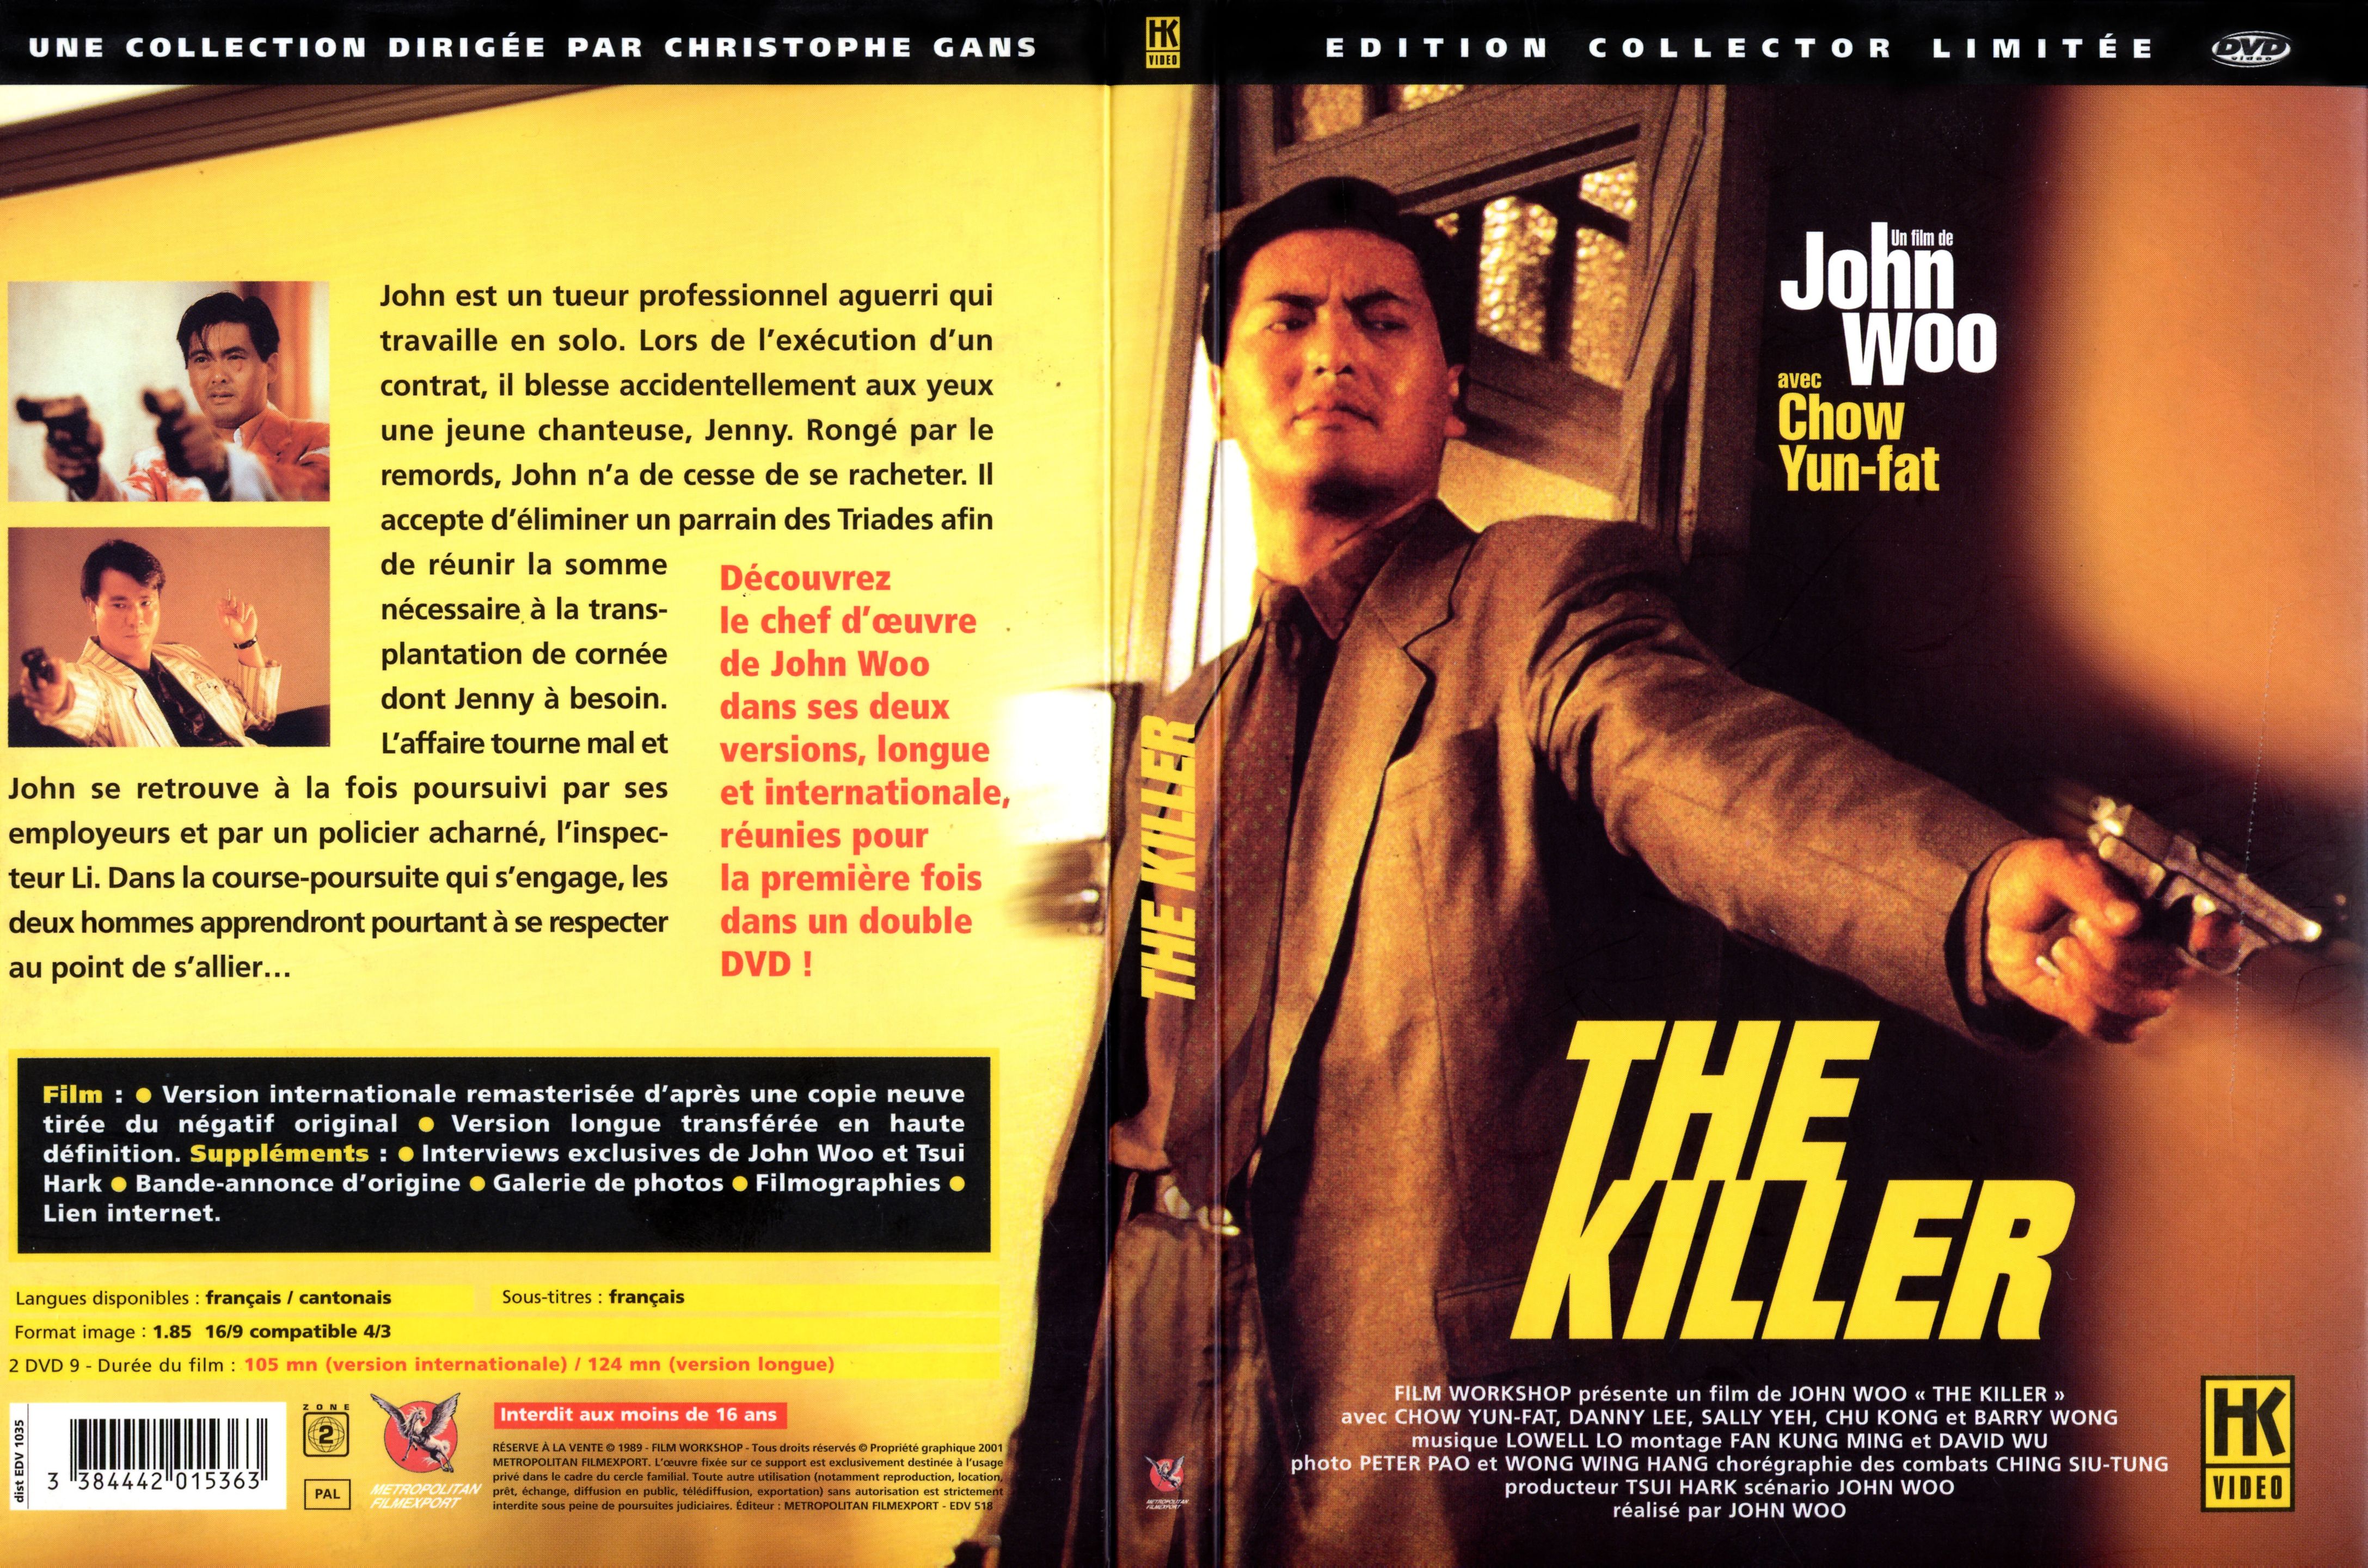 Jaquette DVD The killer